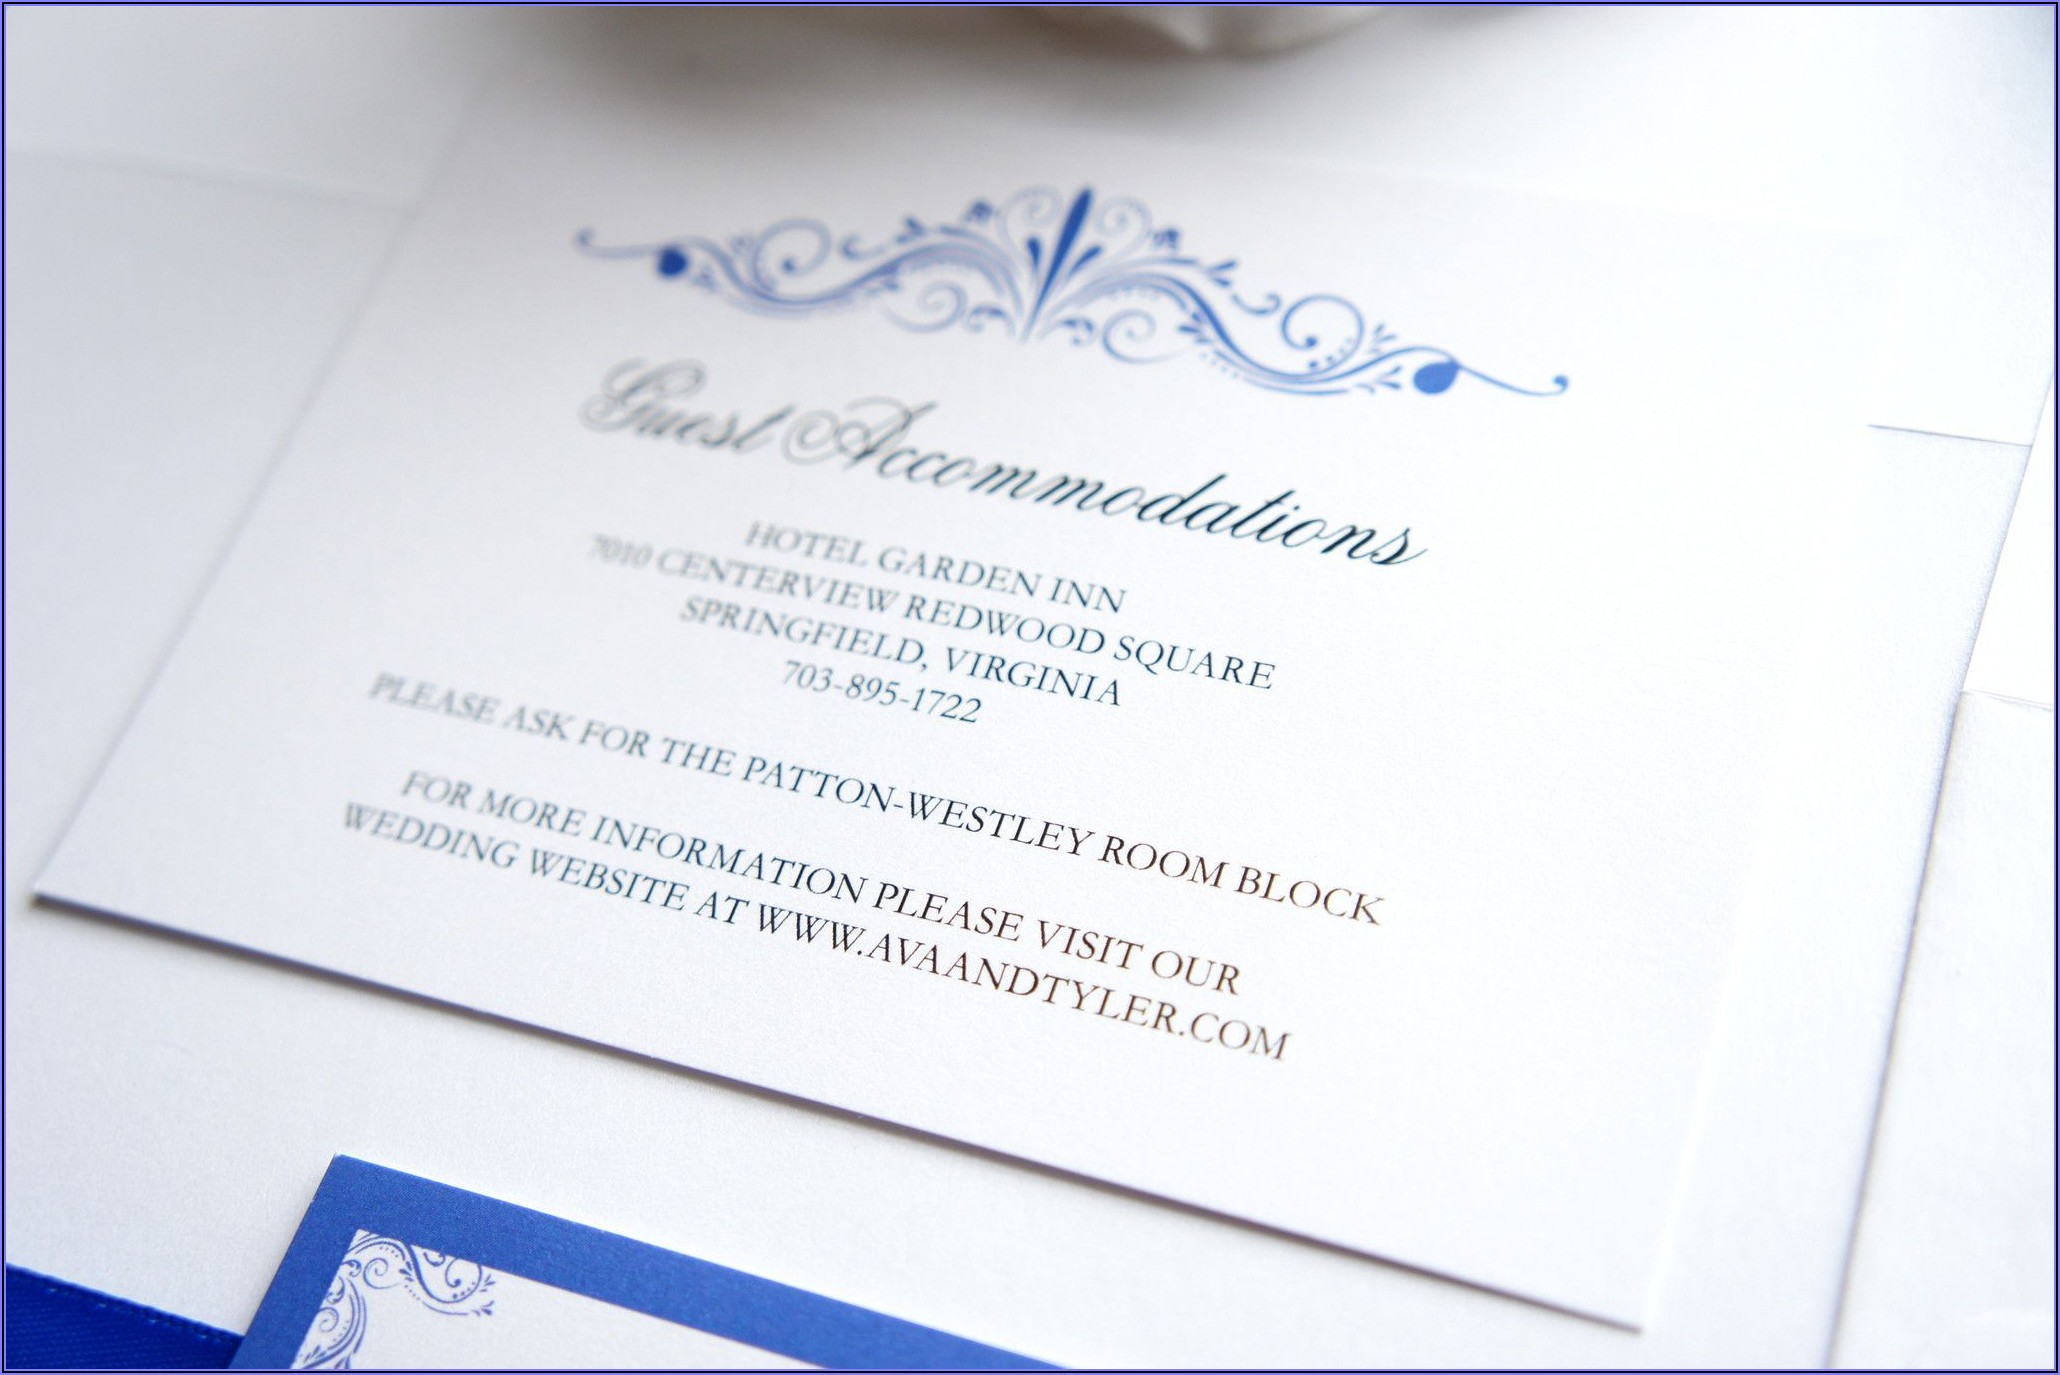 Royal Blue Wedding Invitation Sample